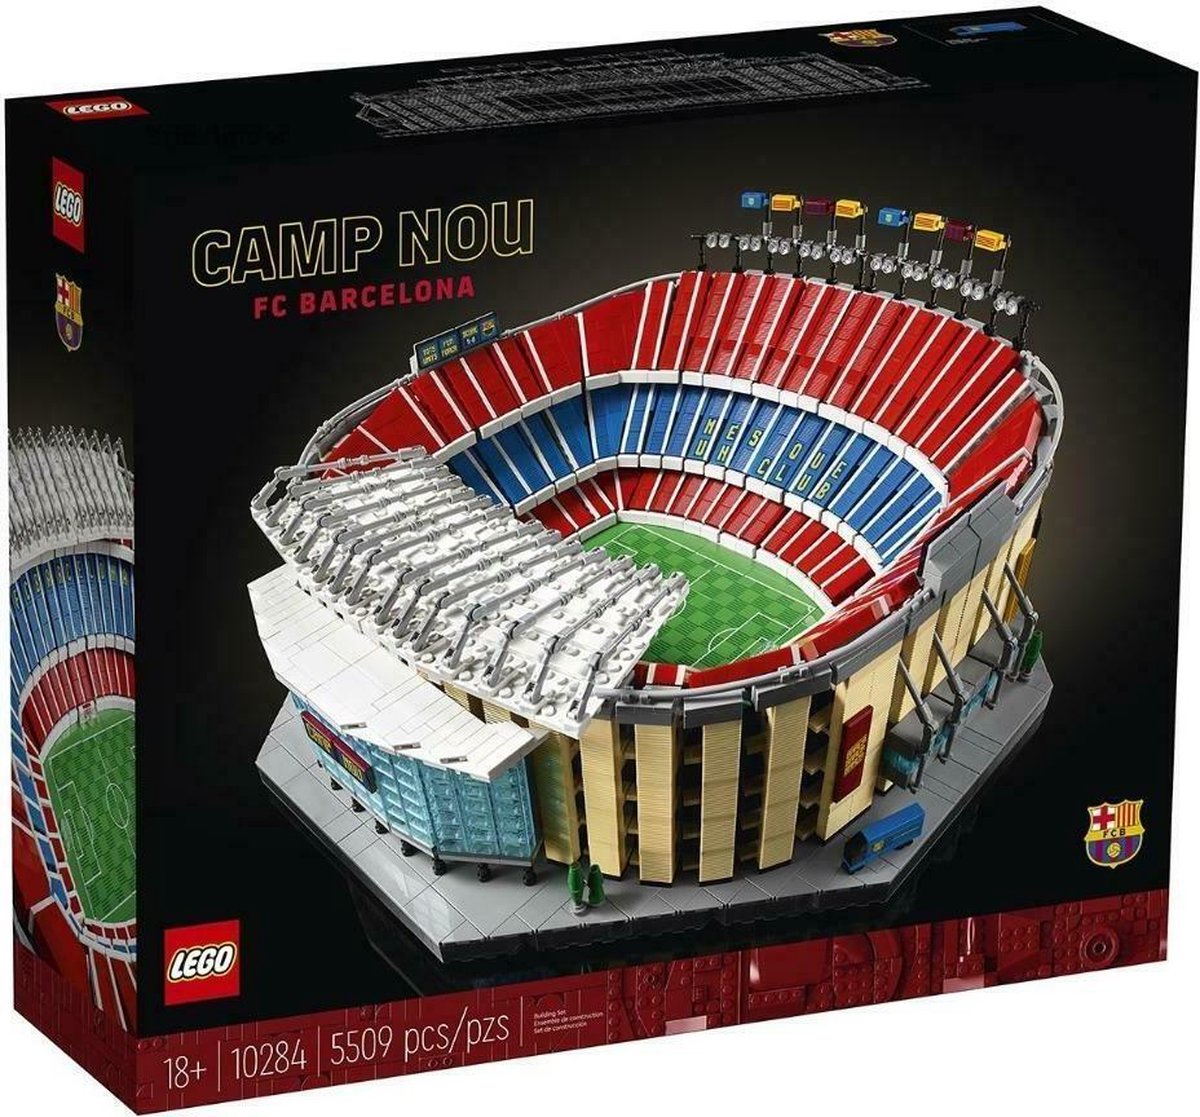 LEGO Creator Expert Icons 10284 Le Camp Nou - FC Barcelone, Set